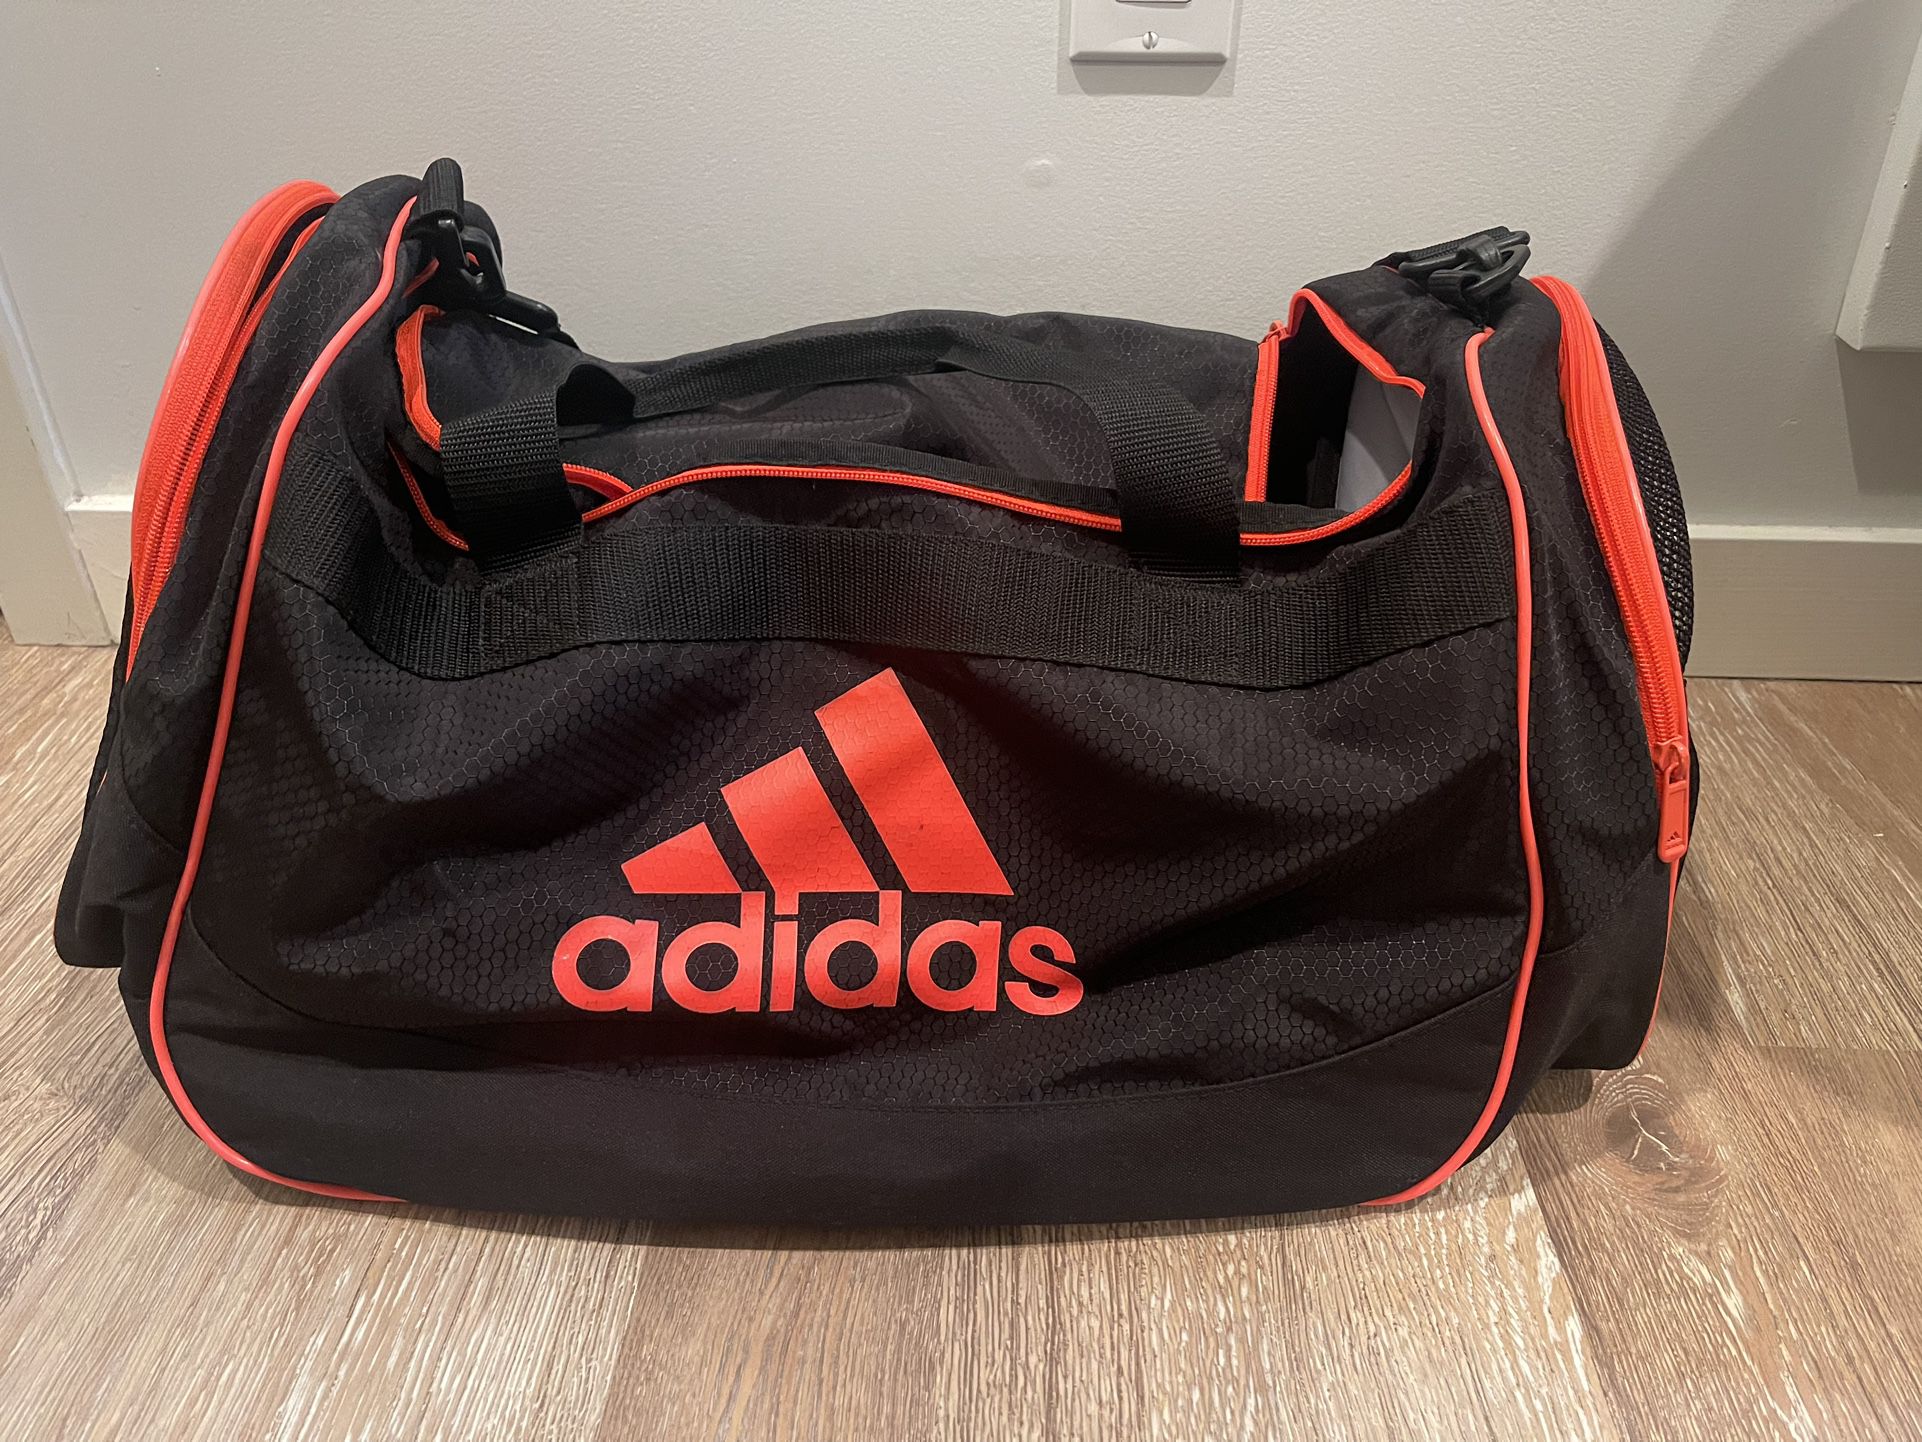 Adidas Soccer Duffle bag